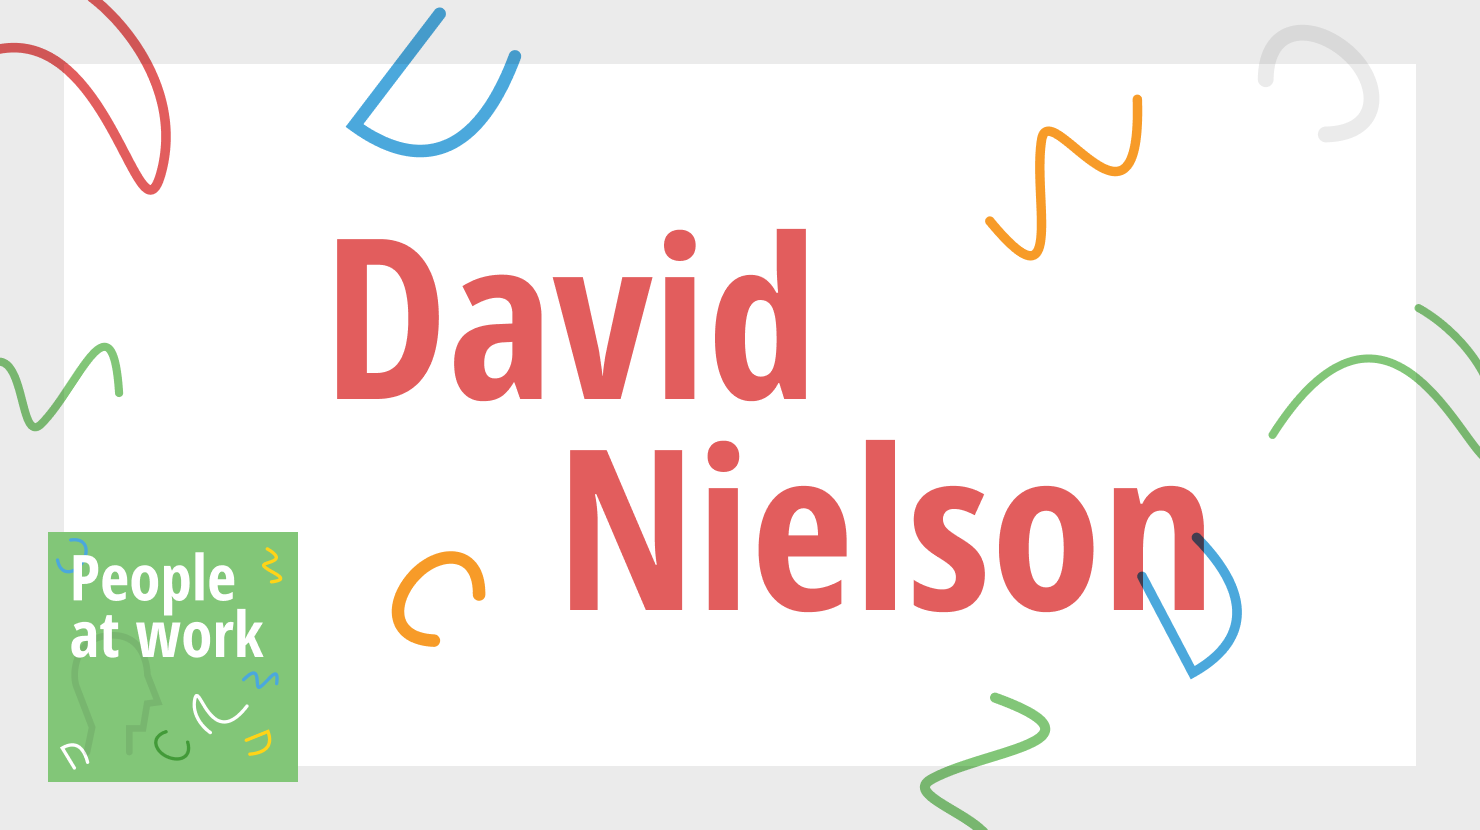 Self-awareness fuels success, says David Nielson